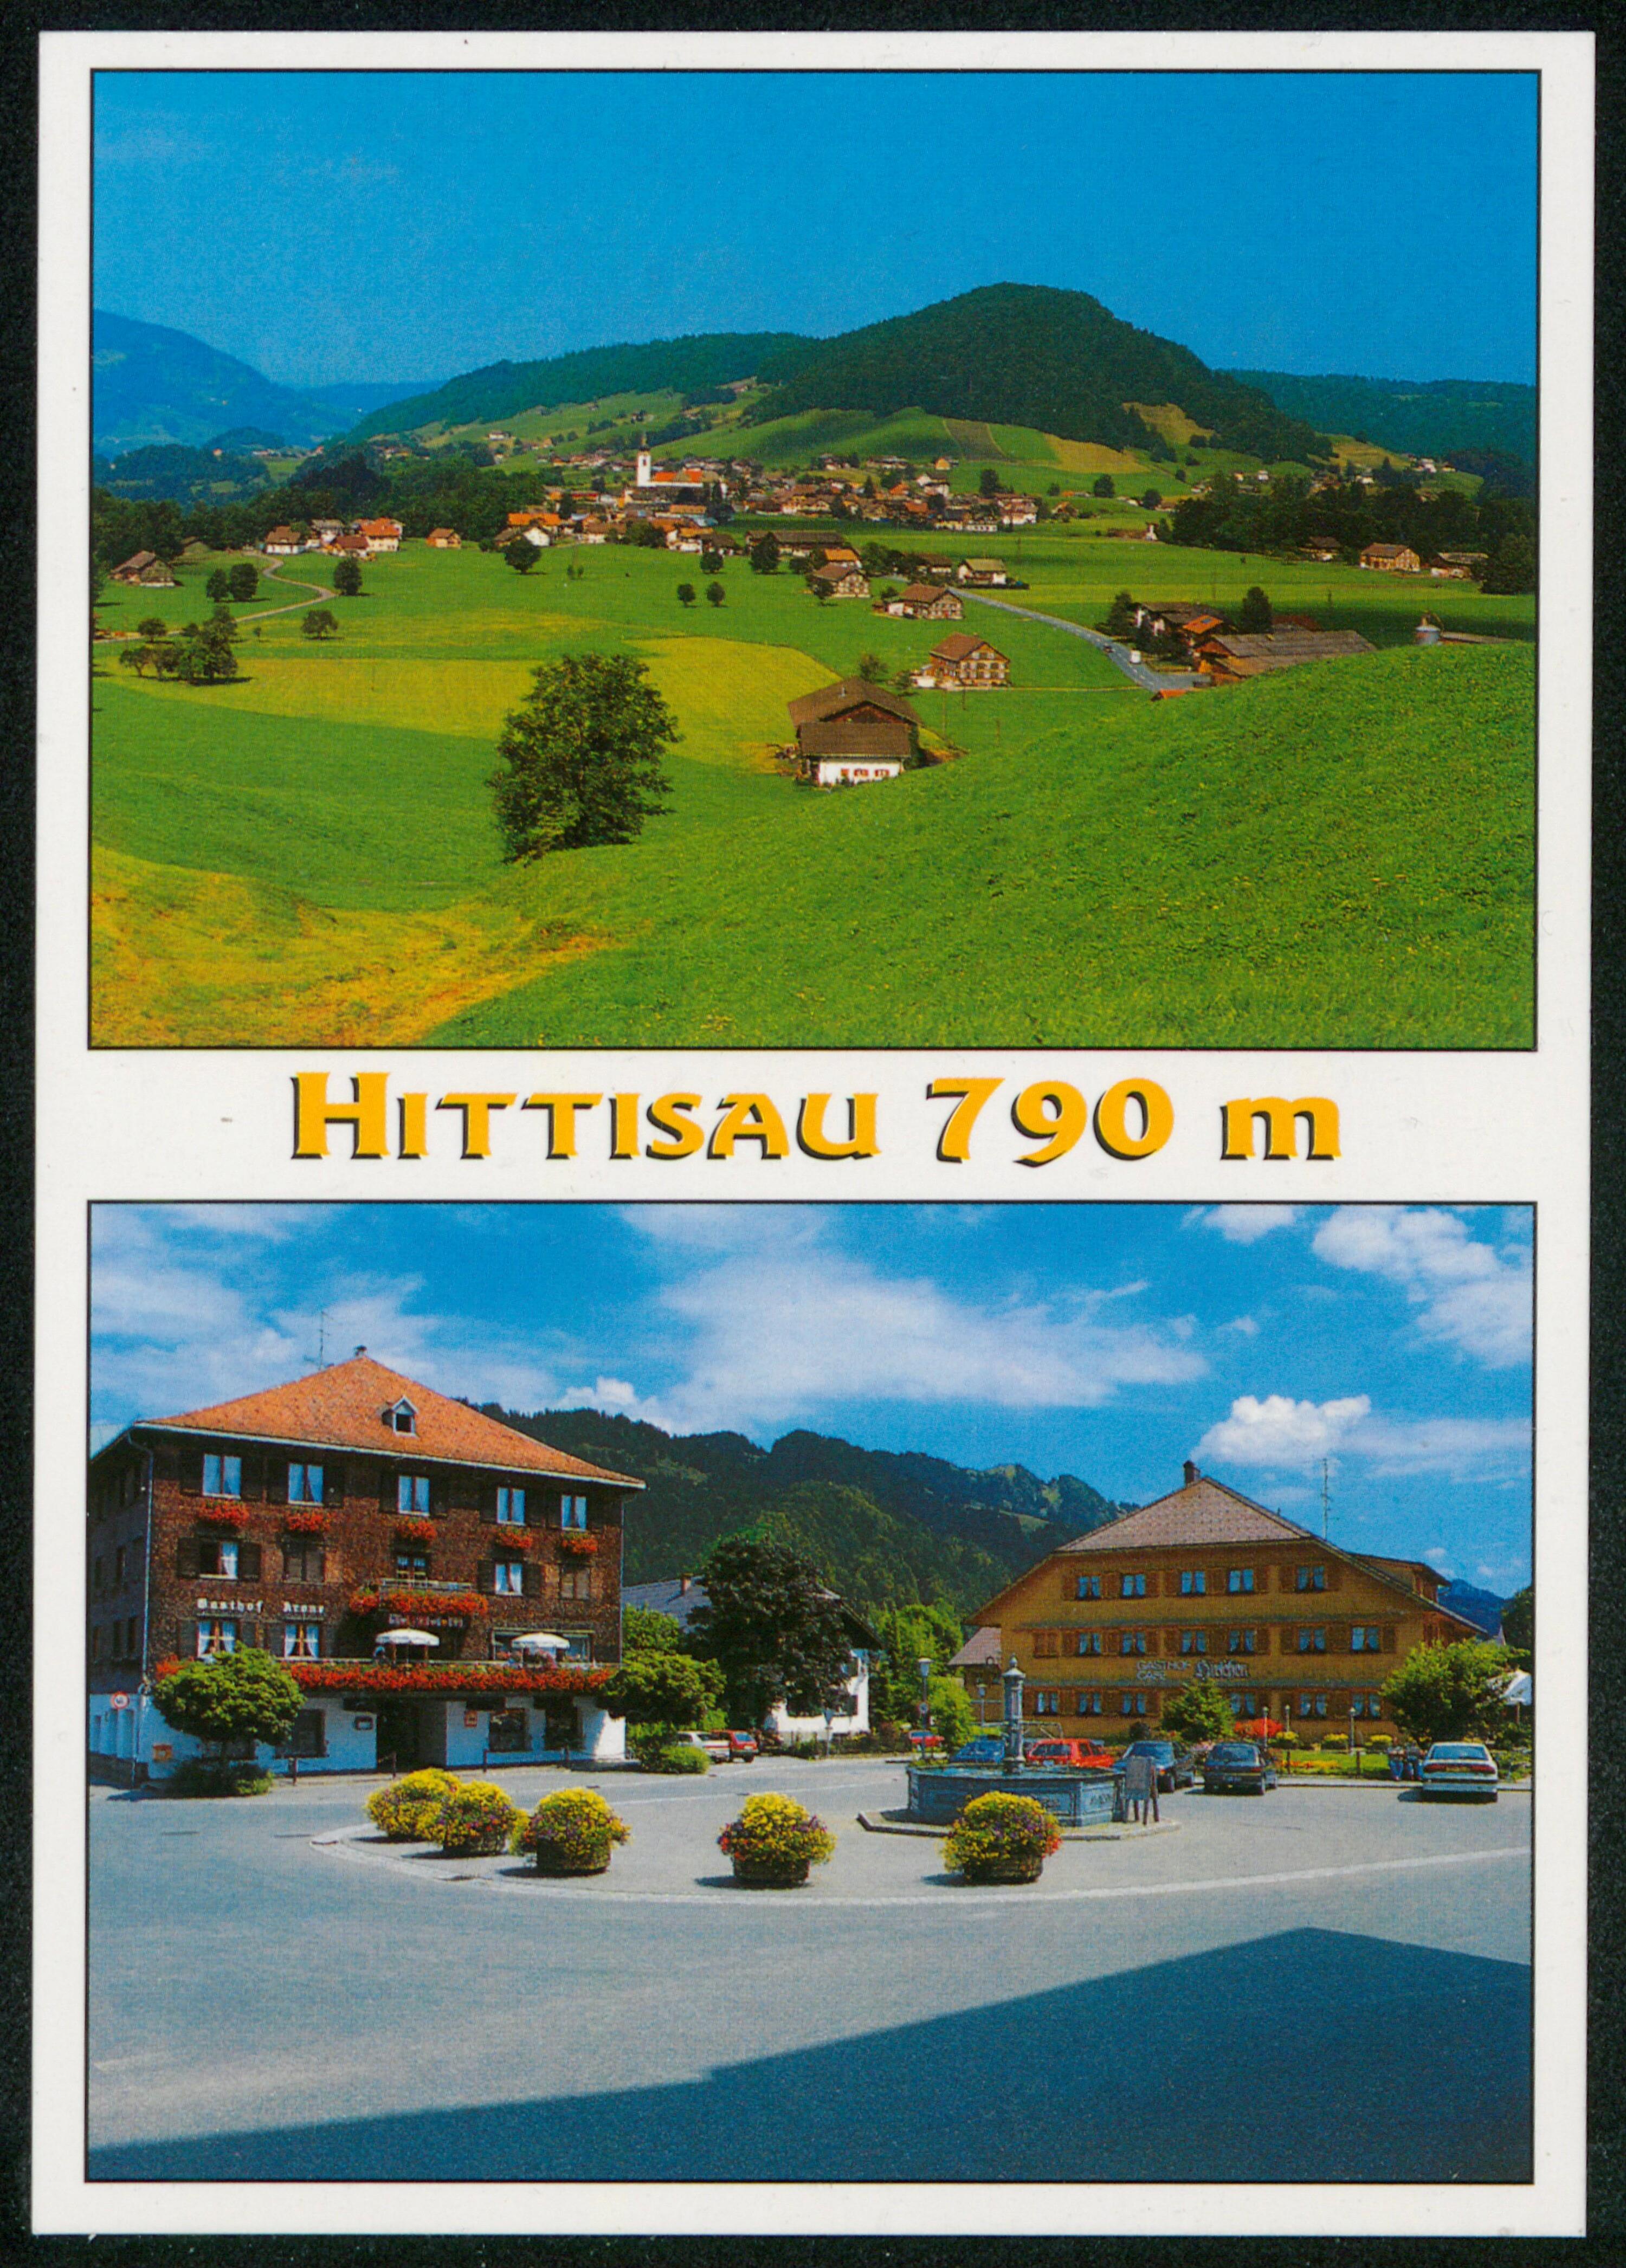 Hittisau 790 m></div>


    <hr>
    <div class=